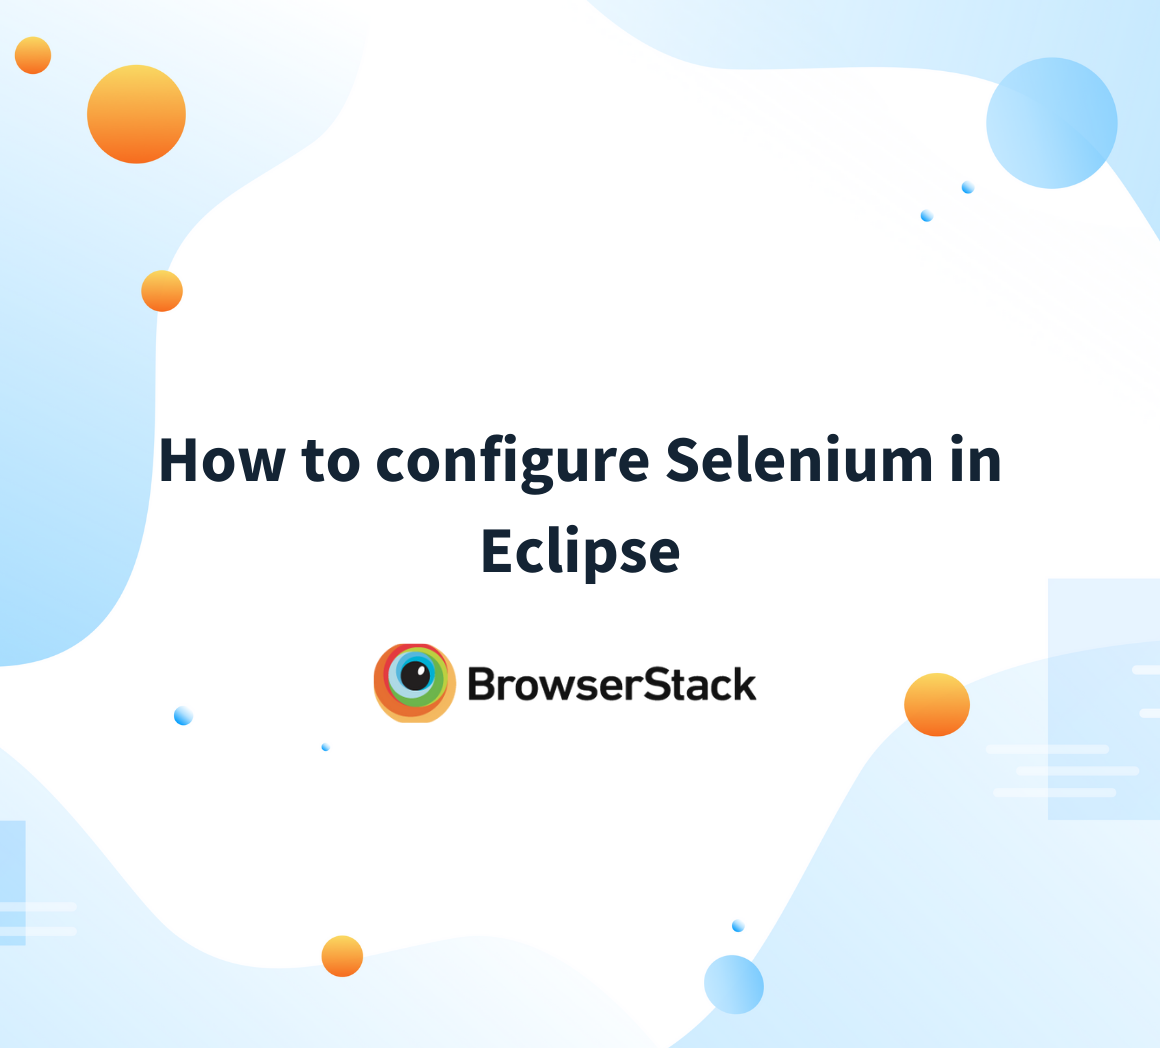 Selenium and Eclipse: How to setup